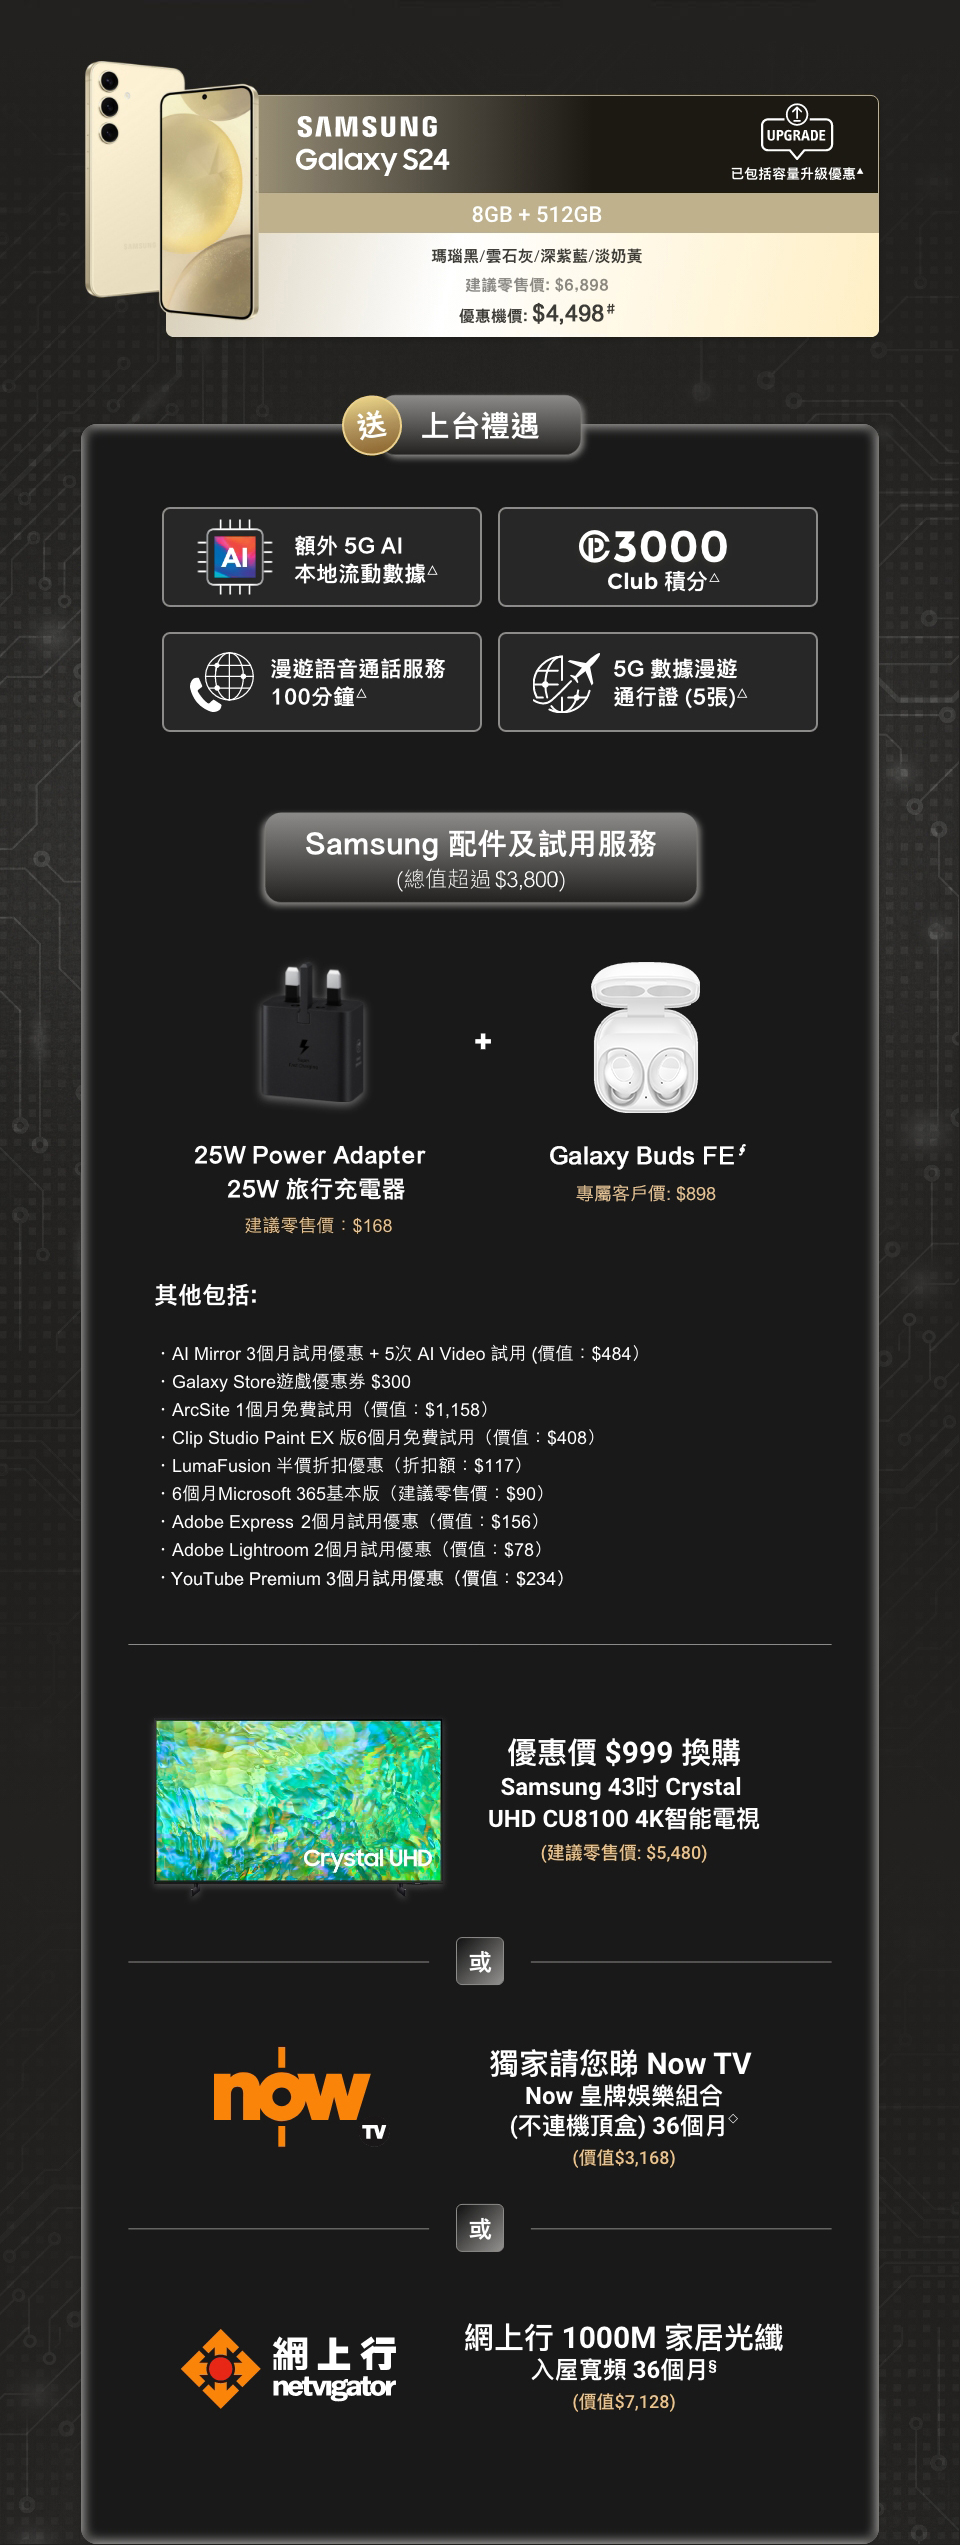 5G 客戶優惠 Galaxy S24